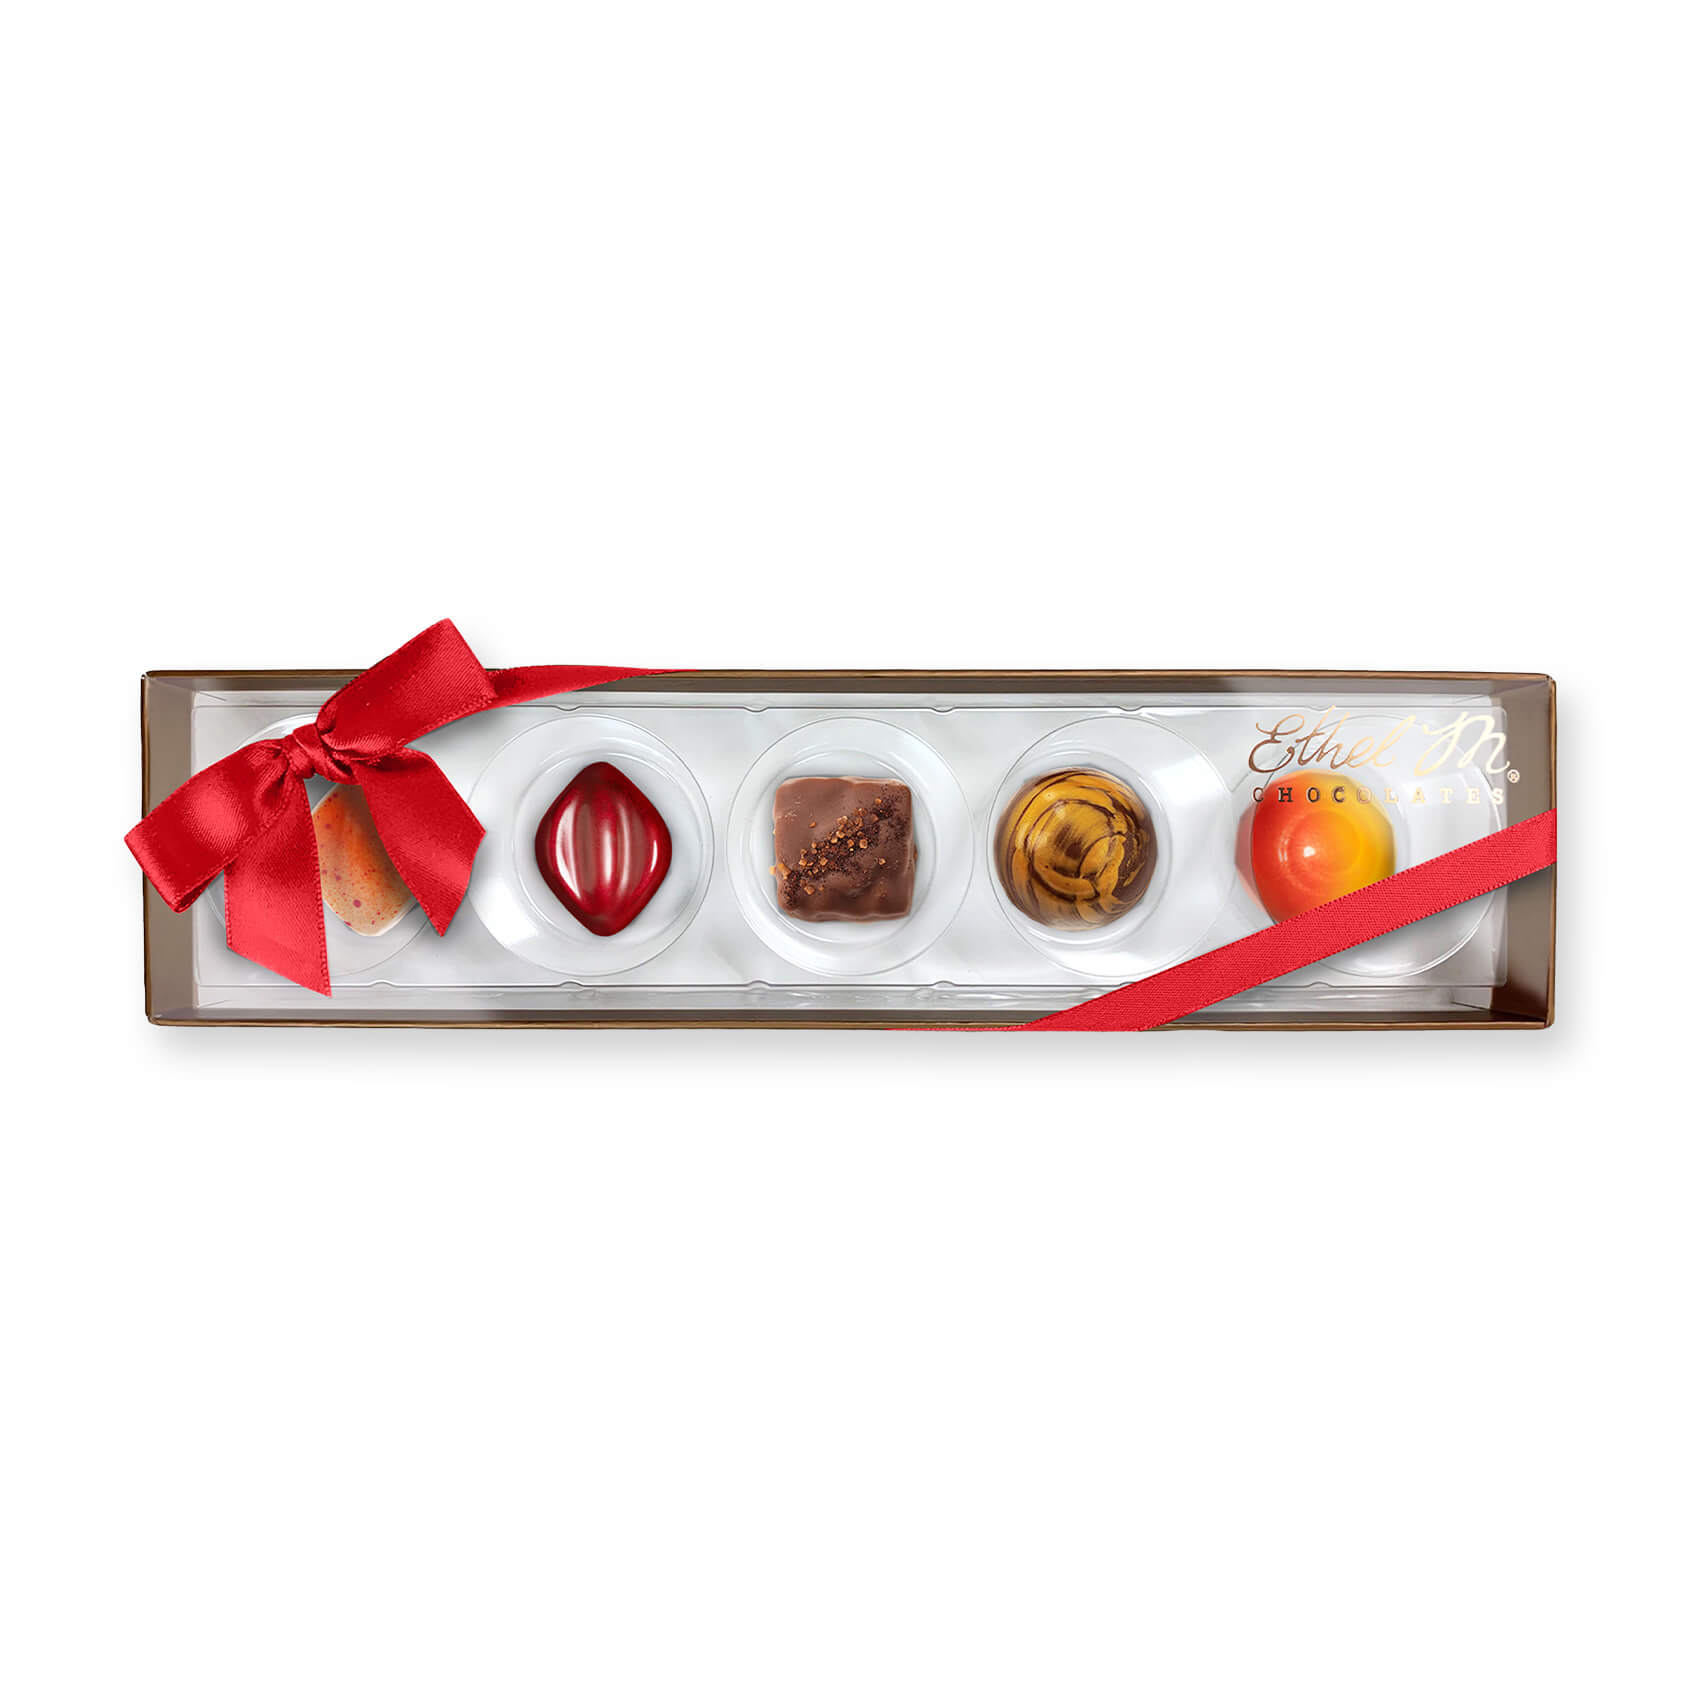 Ethel M Chocolates Fall Favorites 5-Piece Premium Sampler, Limited Edition Flavors